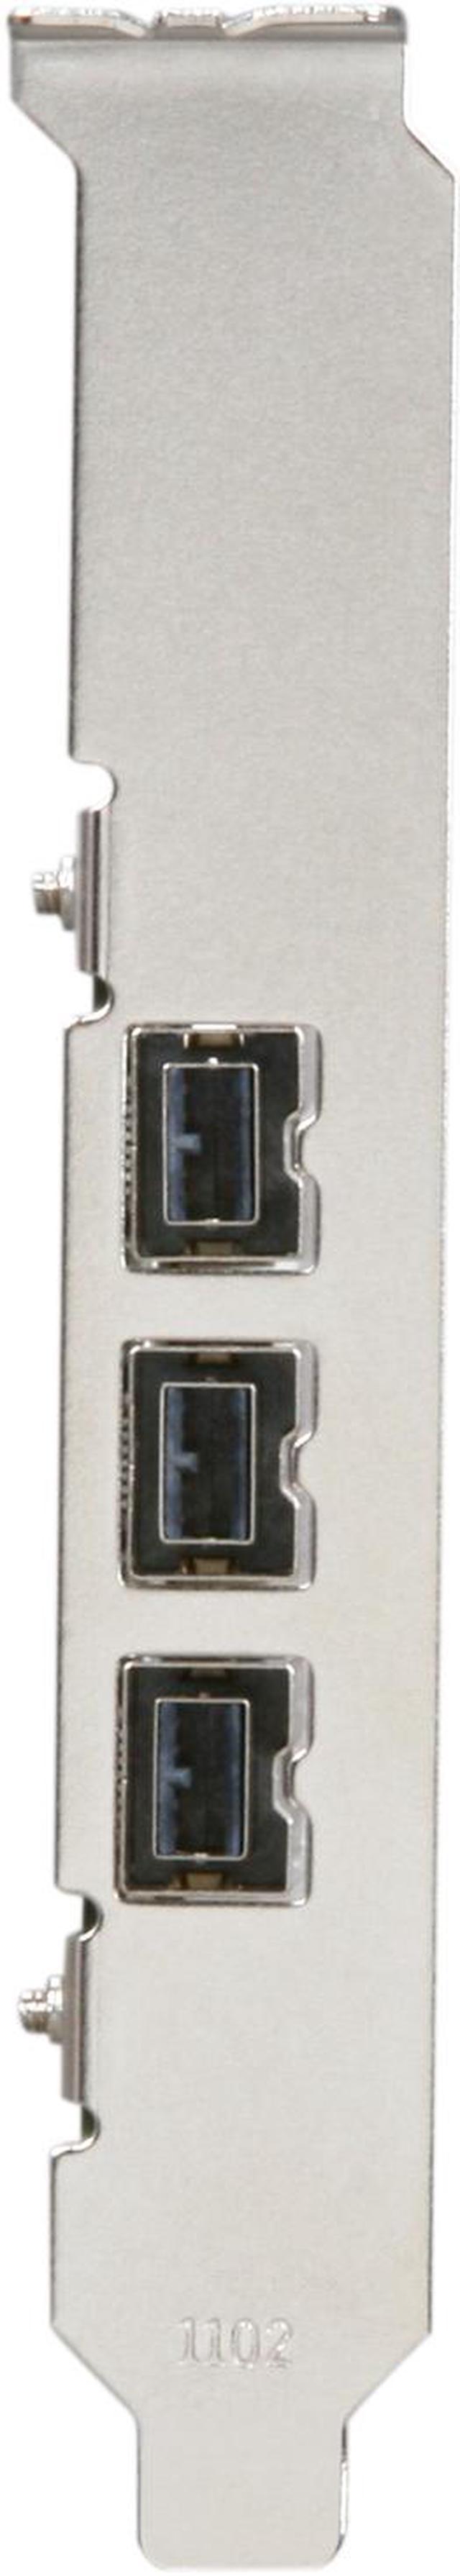 SIIG 3 Ports FireWire 800 PCIe Card Model NN-FW0012-S1 - Newegg.com